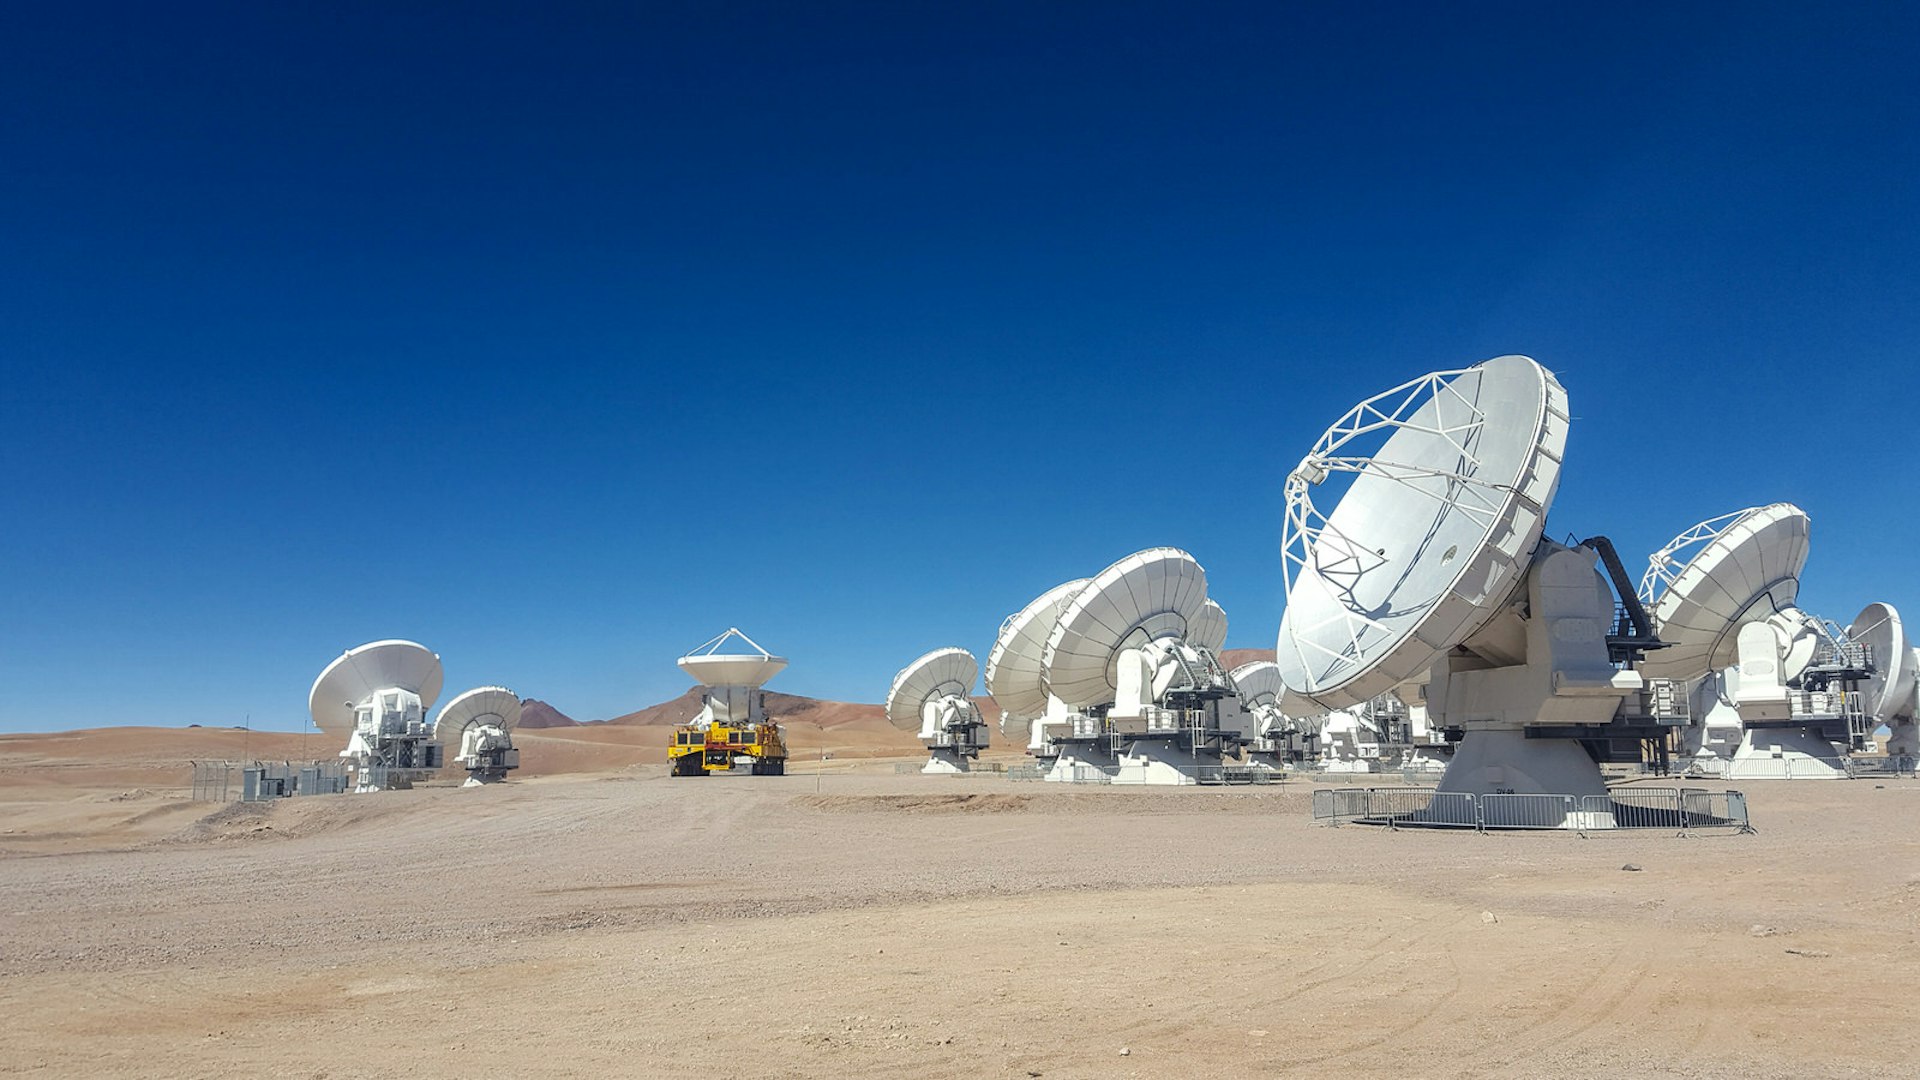 Radio telescopes in the Atacama Desert © Ruben Sanchez / Getty Images